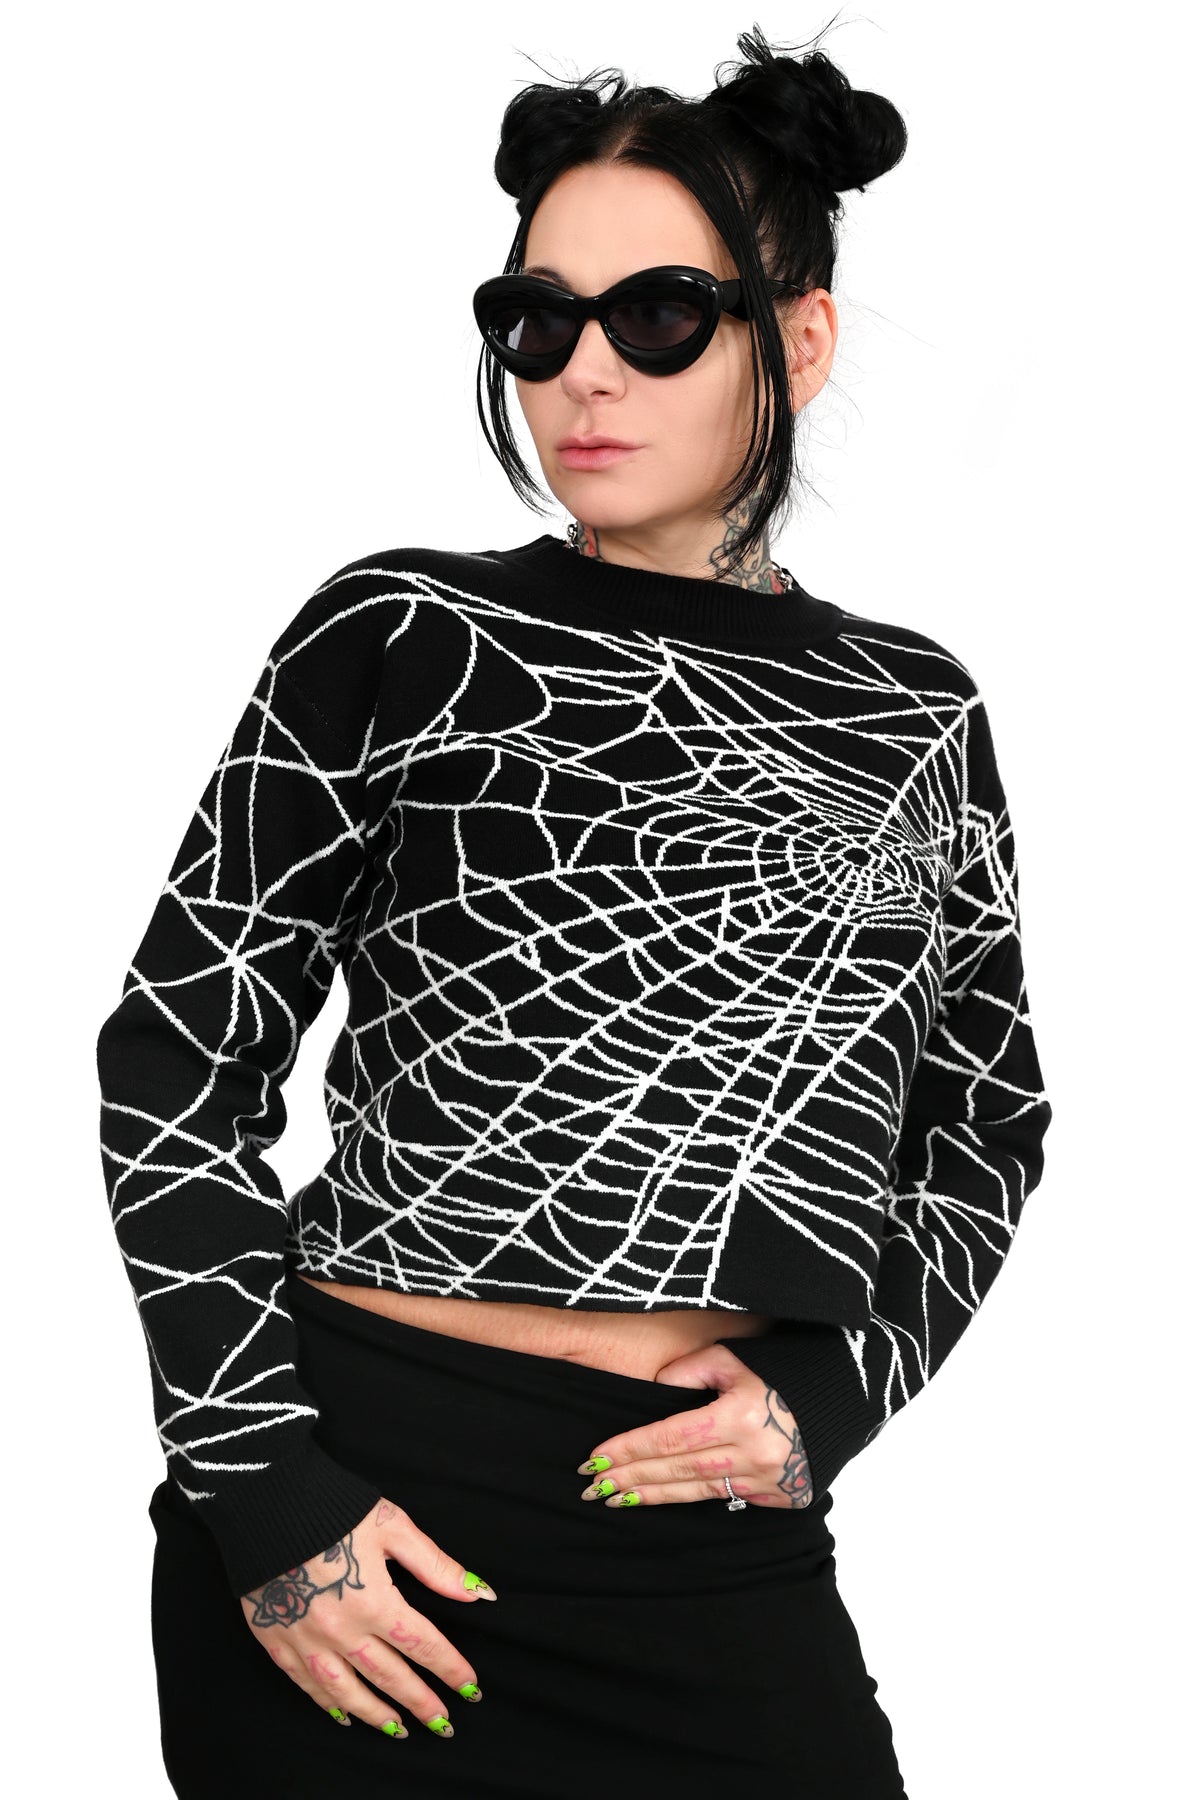 Cobweb Crop Sweater - 3X & 4XL left!